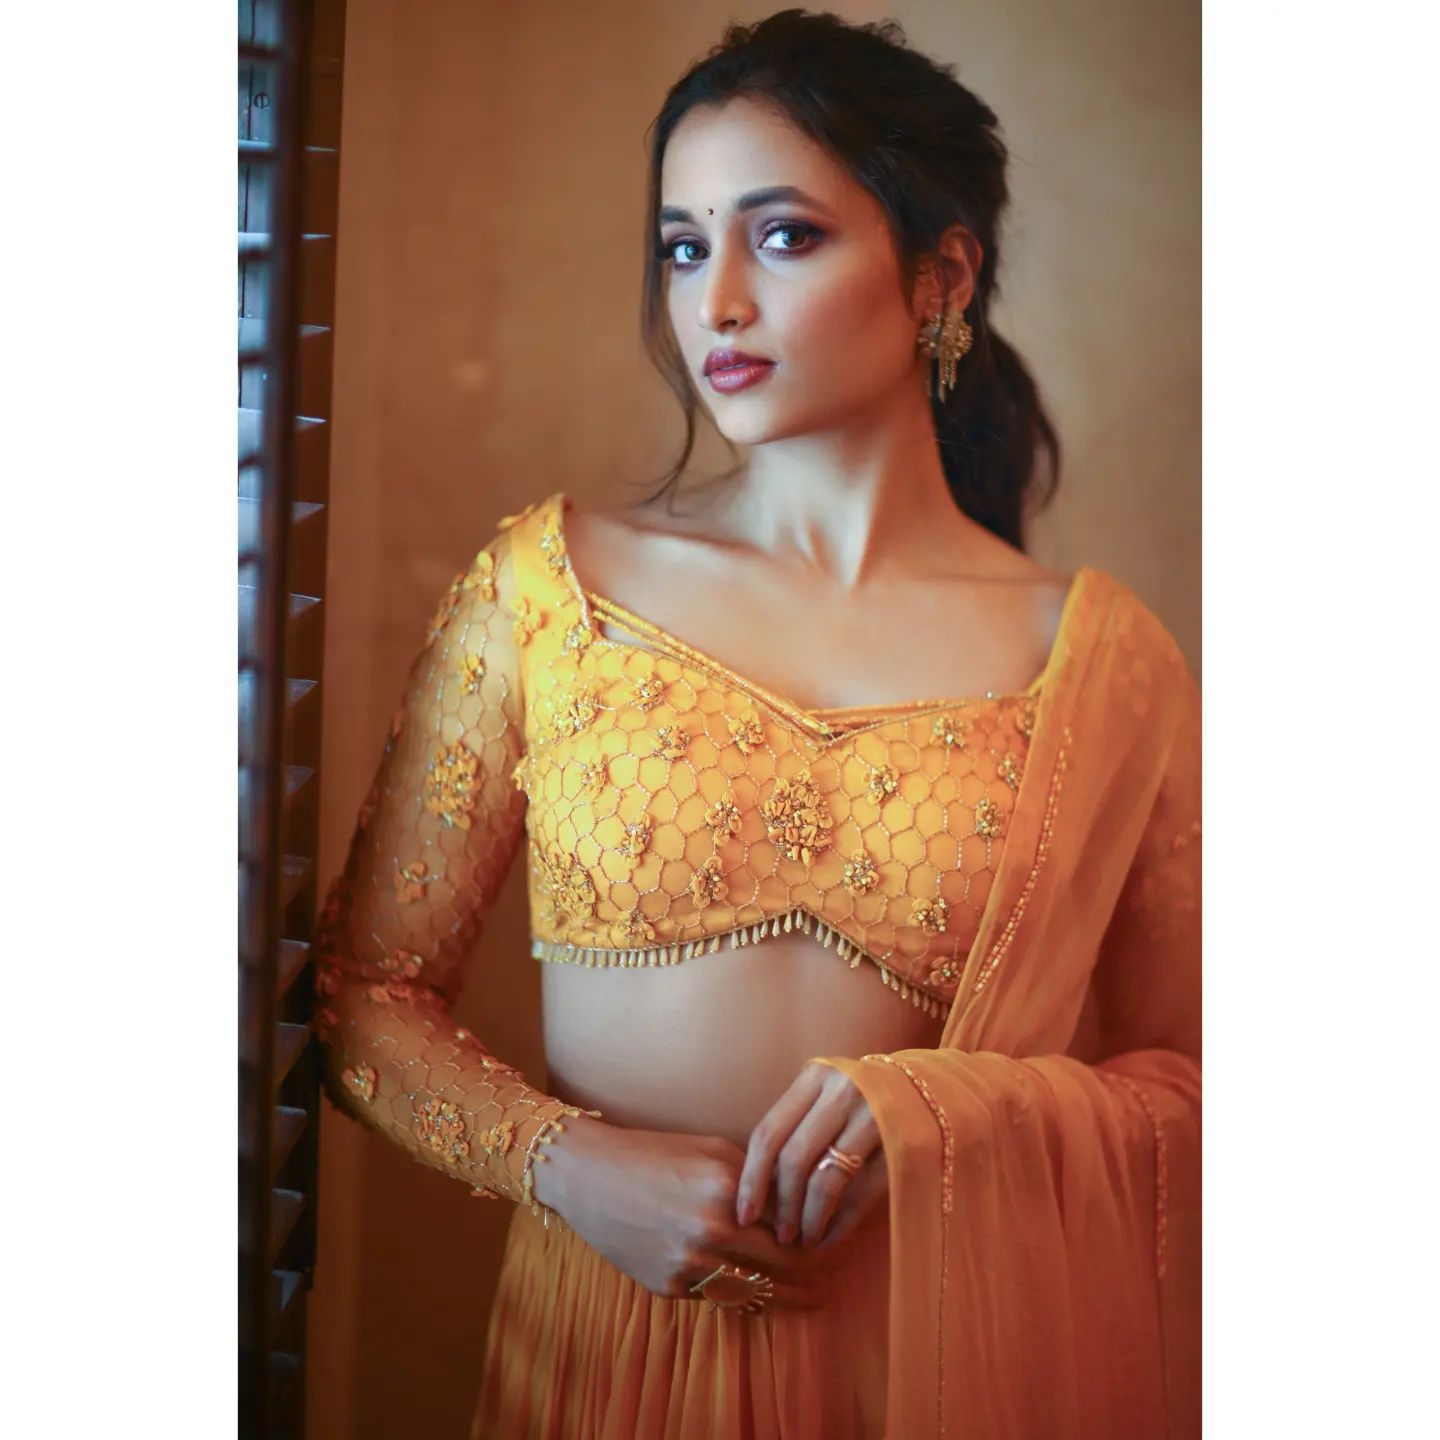 Actress srinidhi shetty hot photos in yellow colour lehenga getting viral